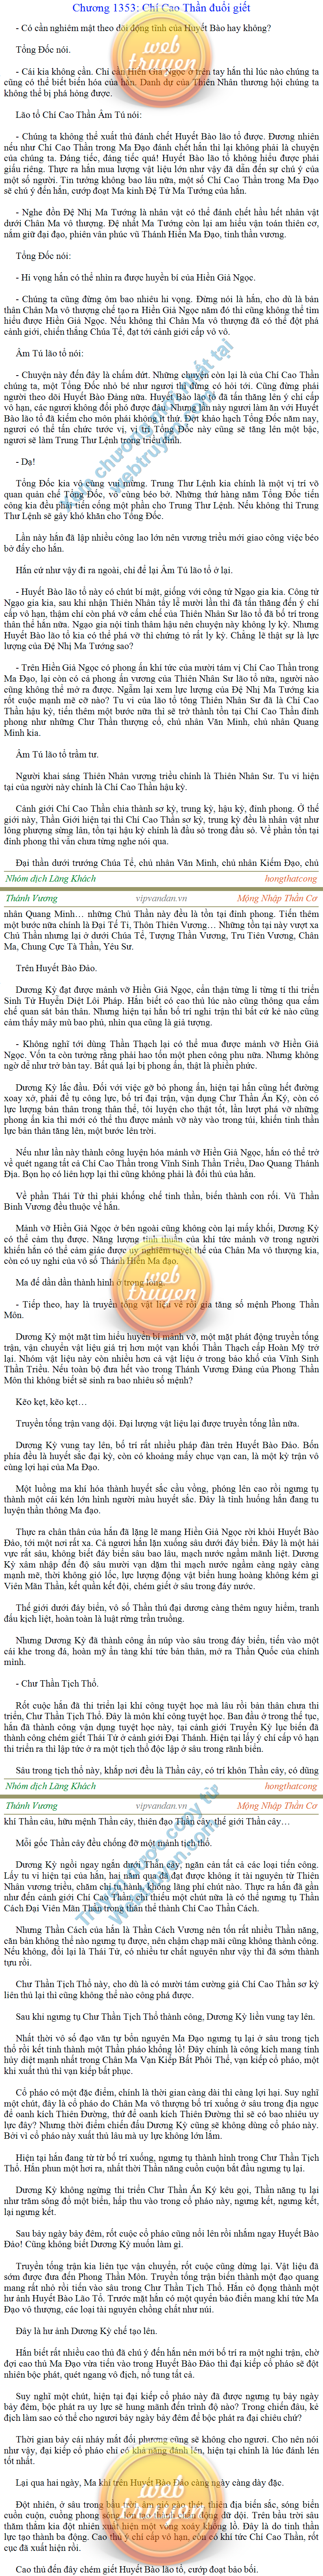 Thanh-vuong-1353.png